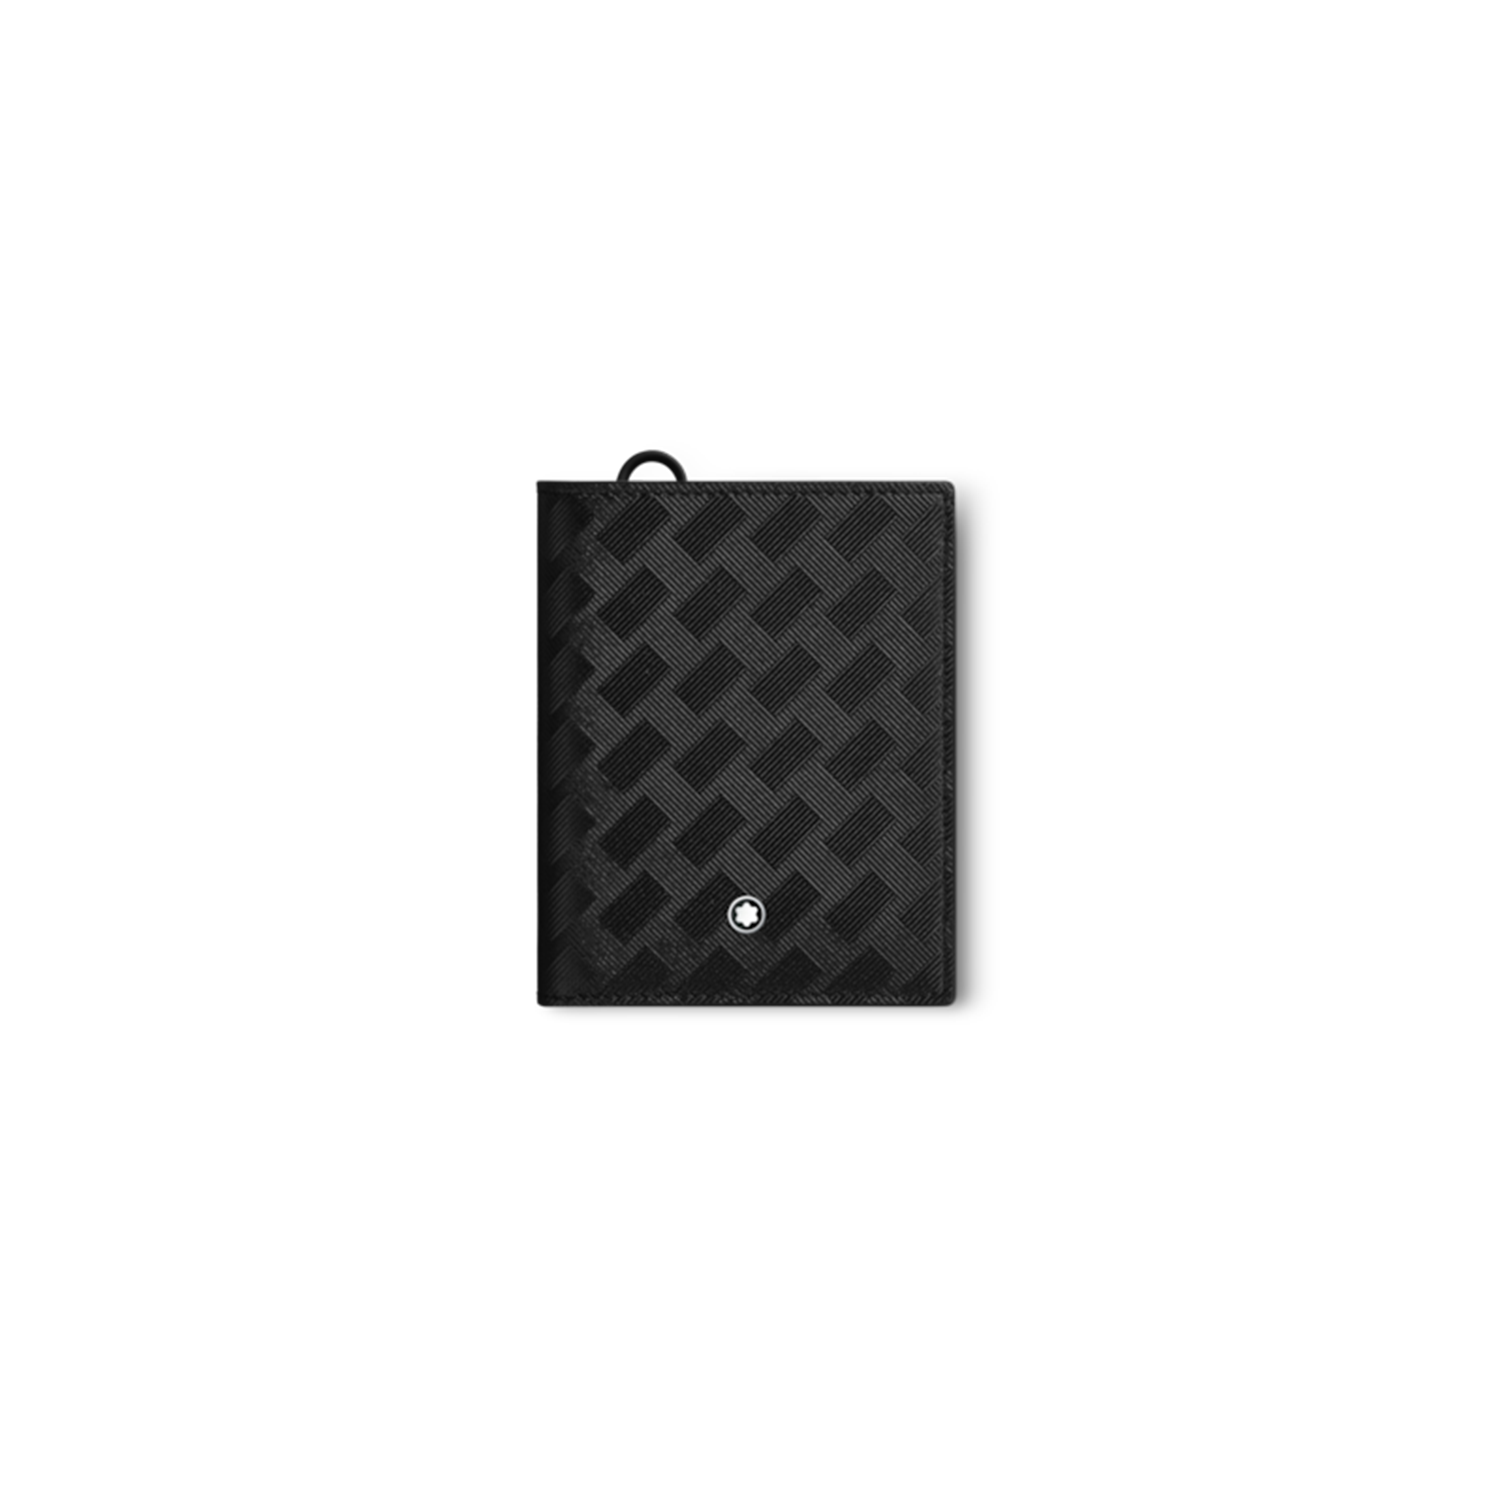 Extreme 3.0 compact wallet 6cc 129975 * Montblanc Lederwaren